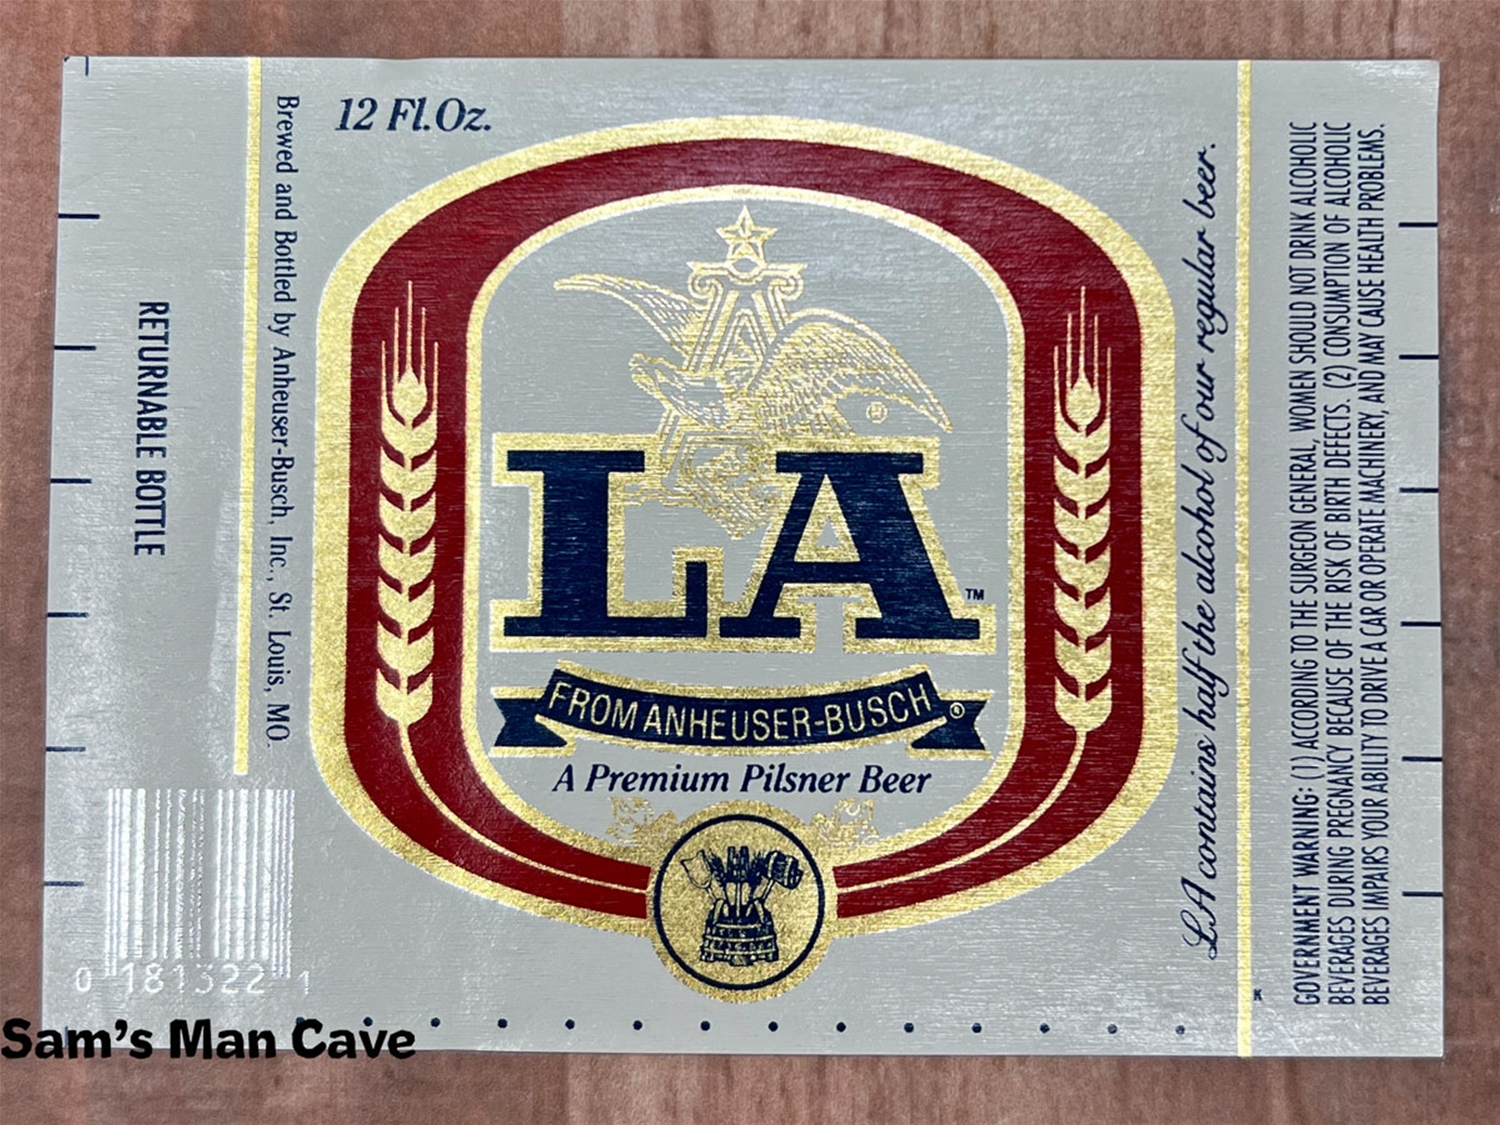 LA Returnable Bottle Beer Label